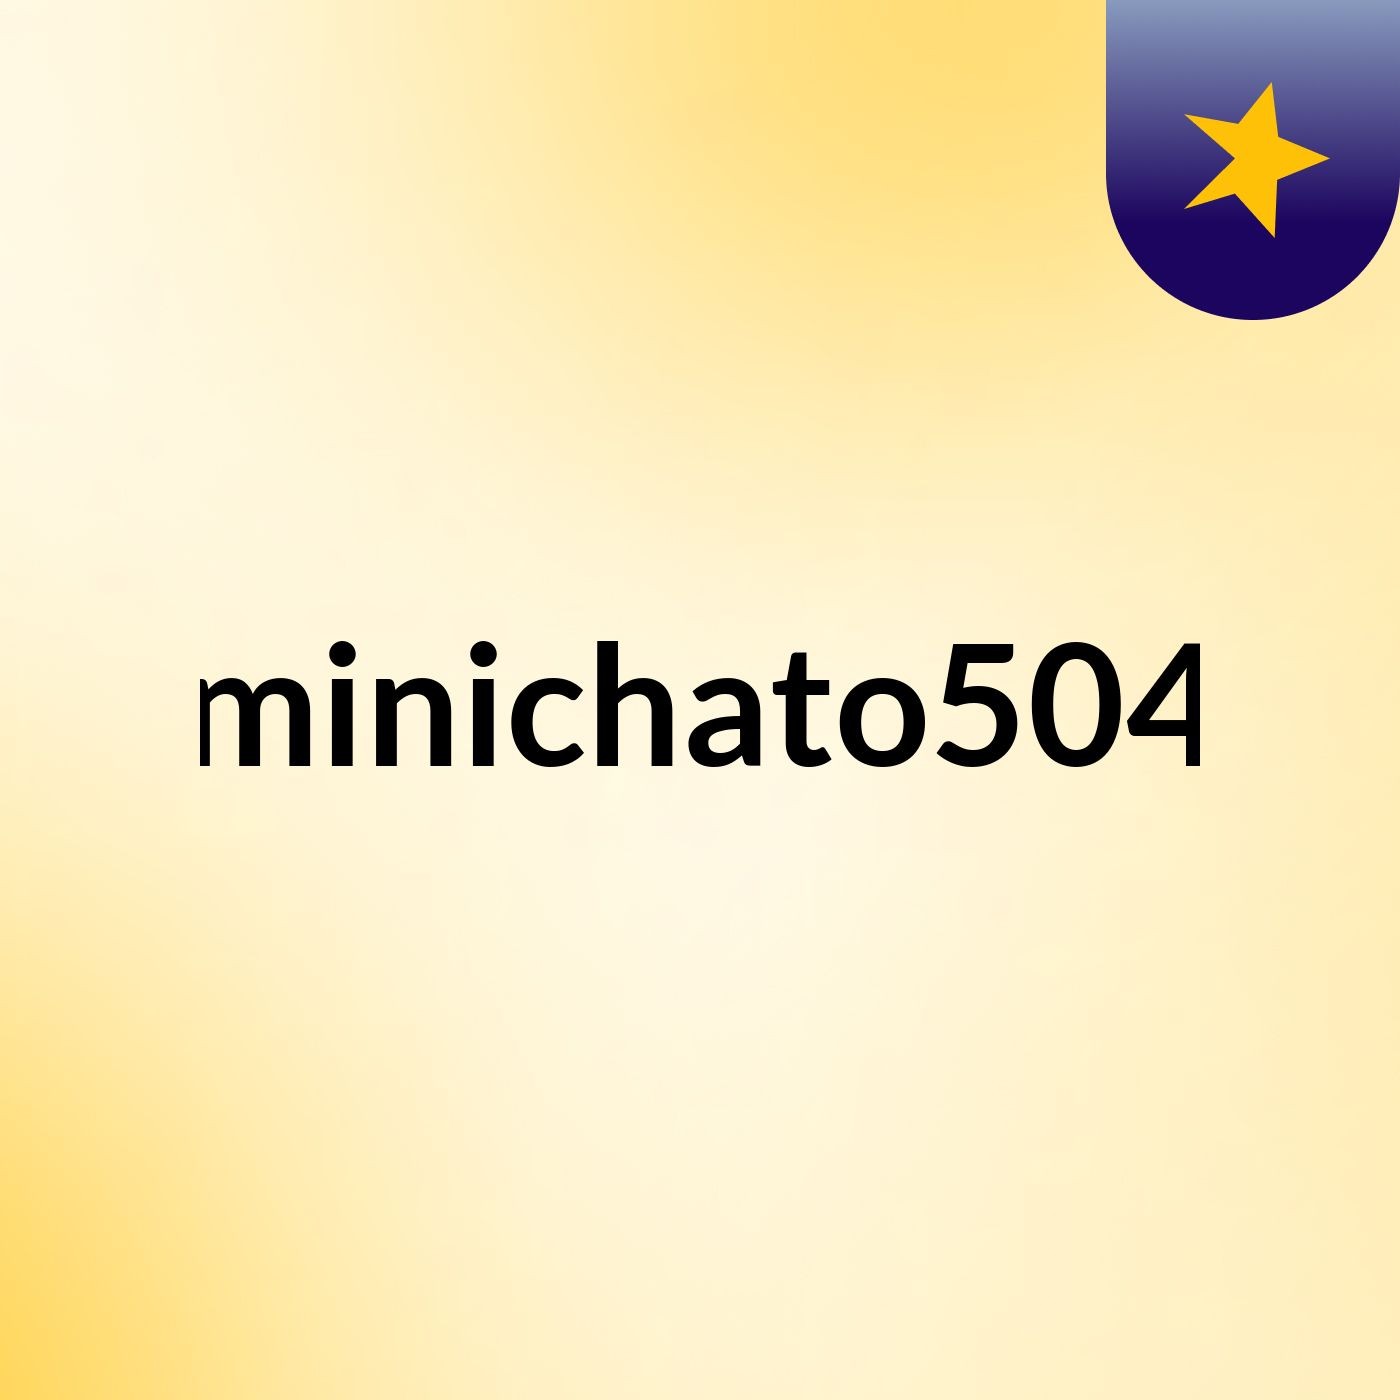 minichato504